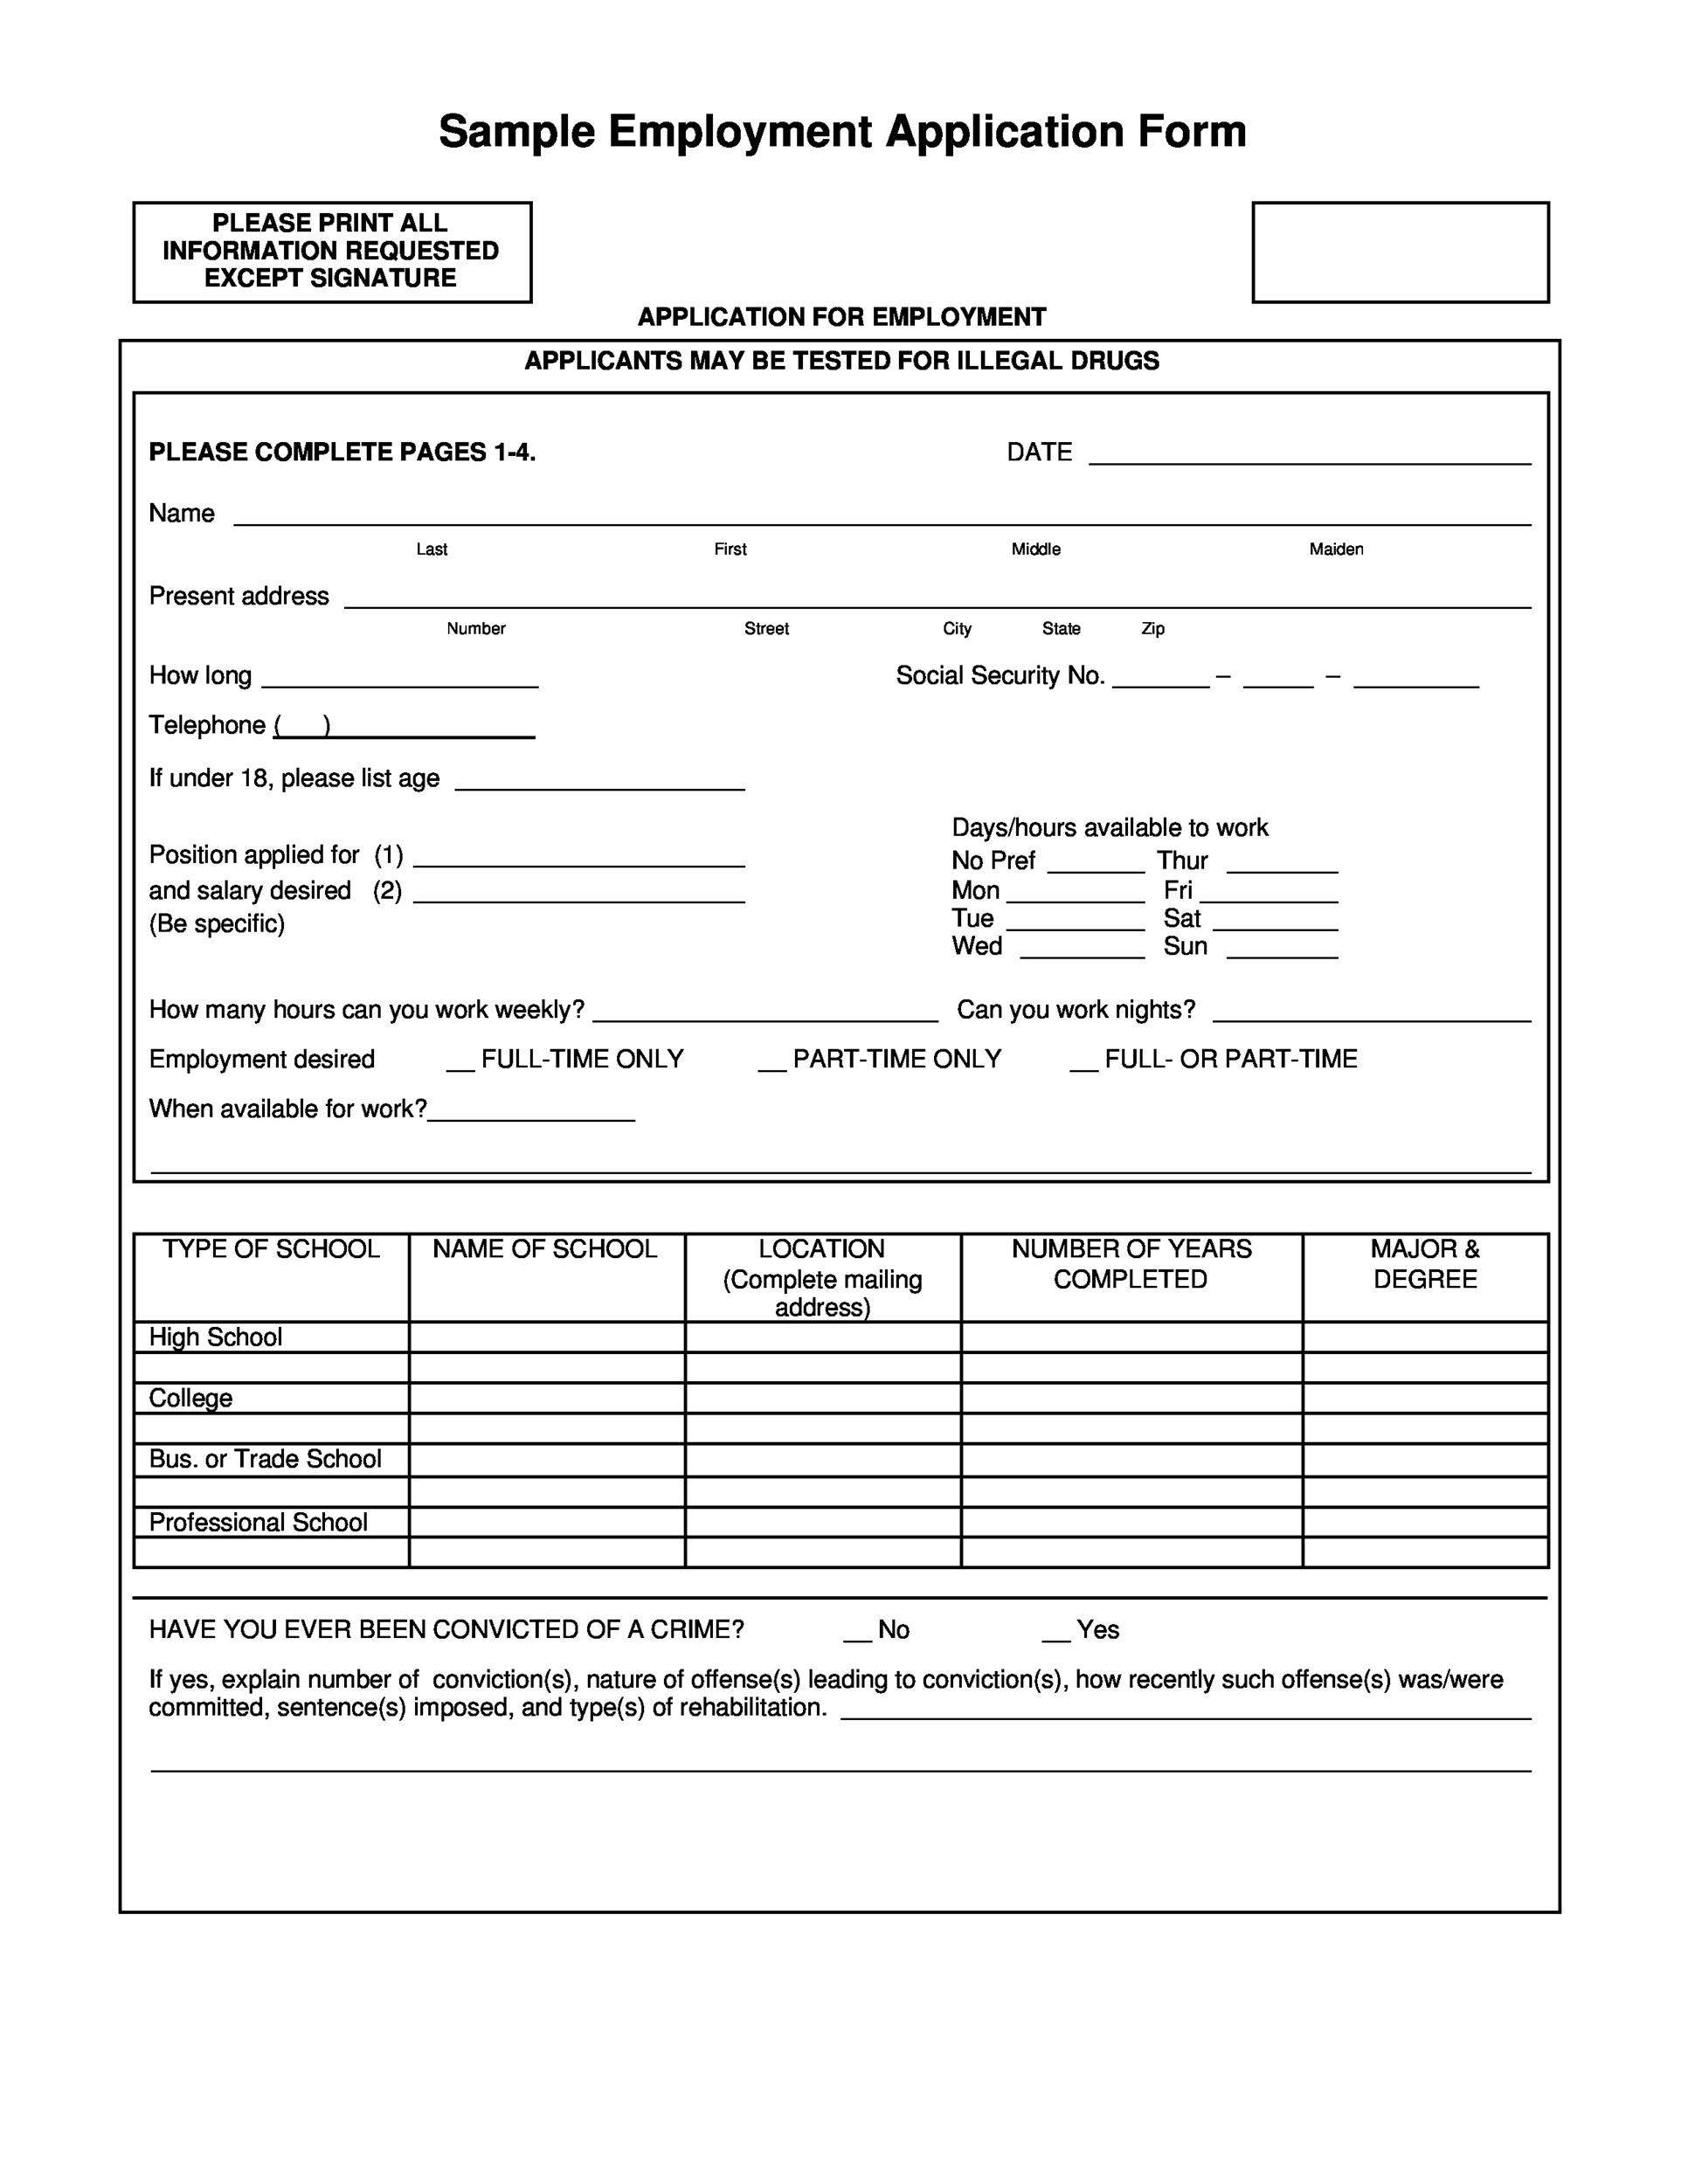 50 Free Employment Job Application Form Templates Printable Templatelab 6838